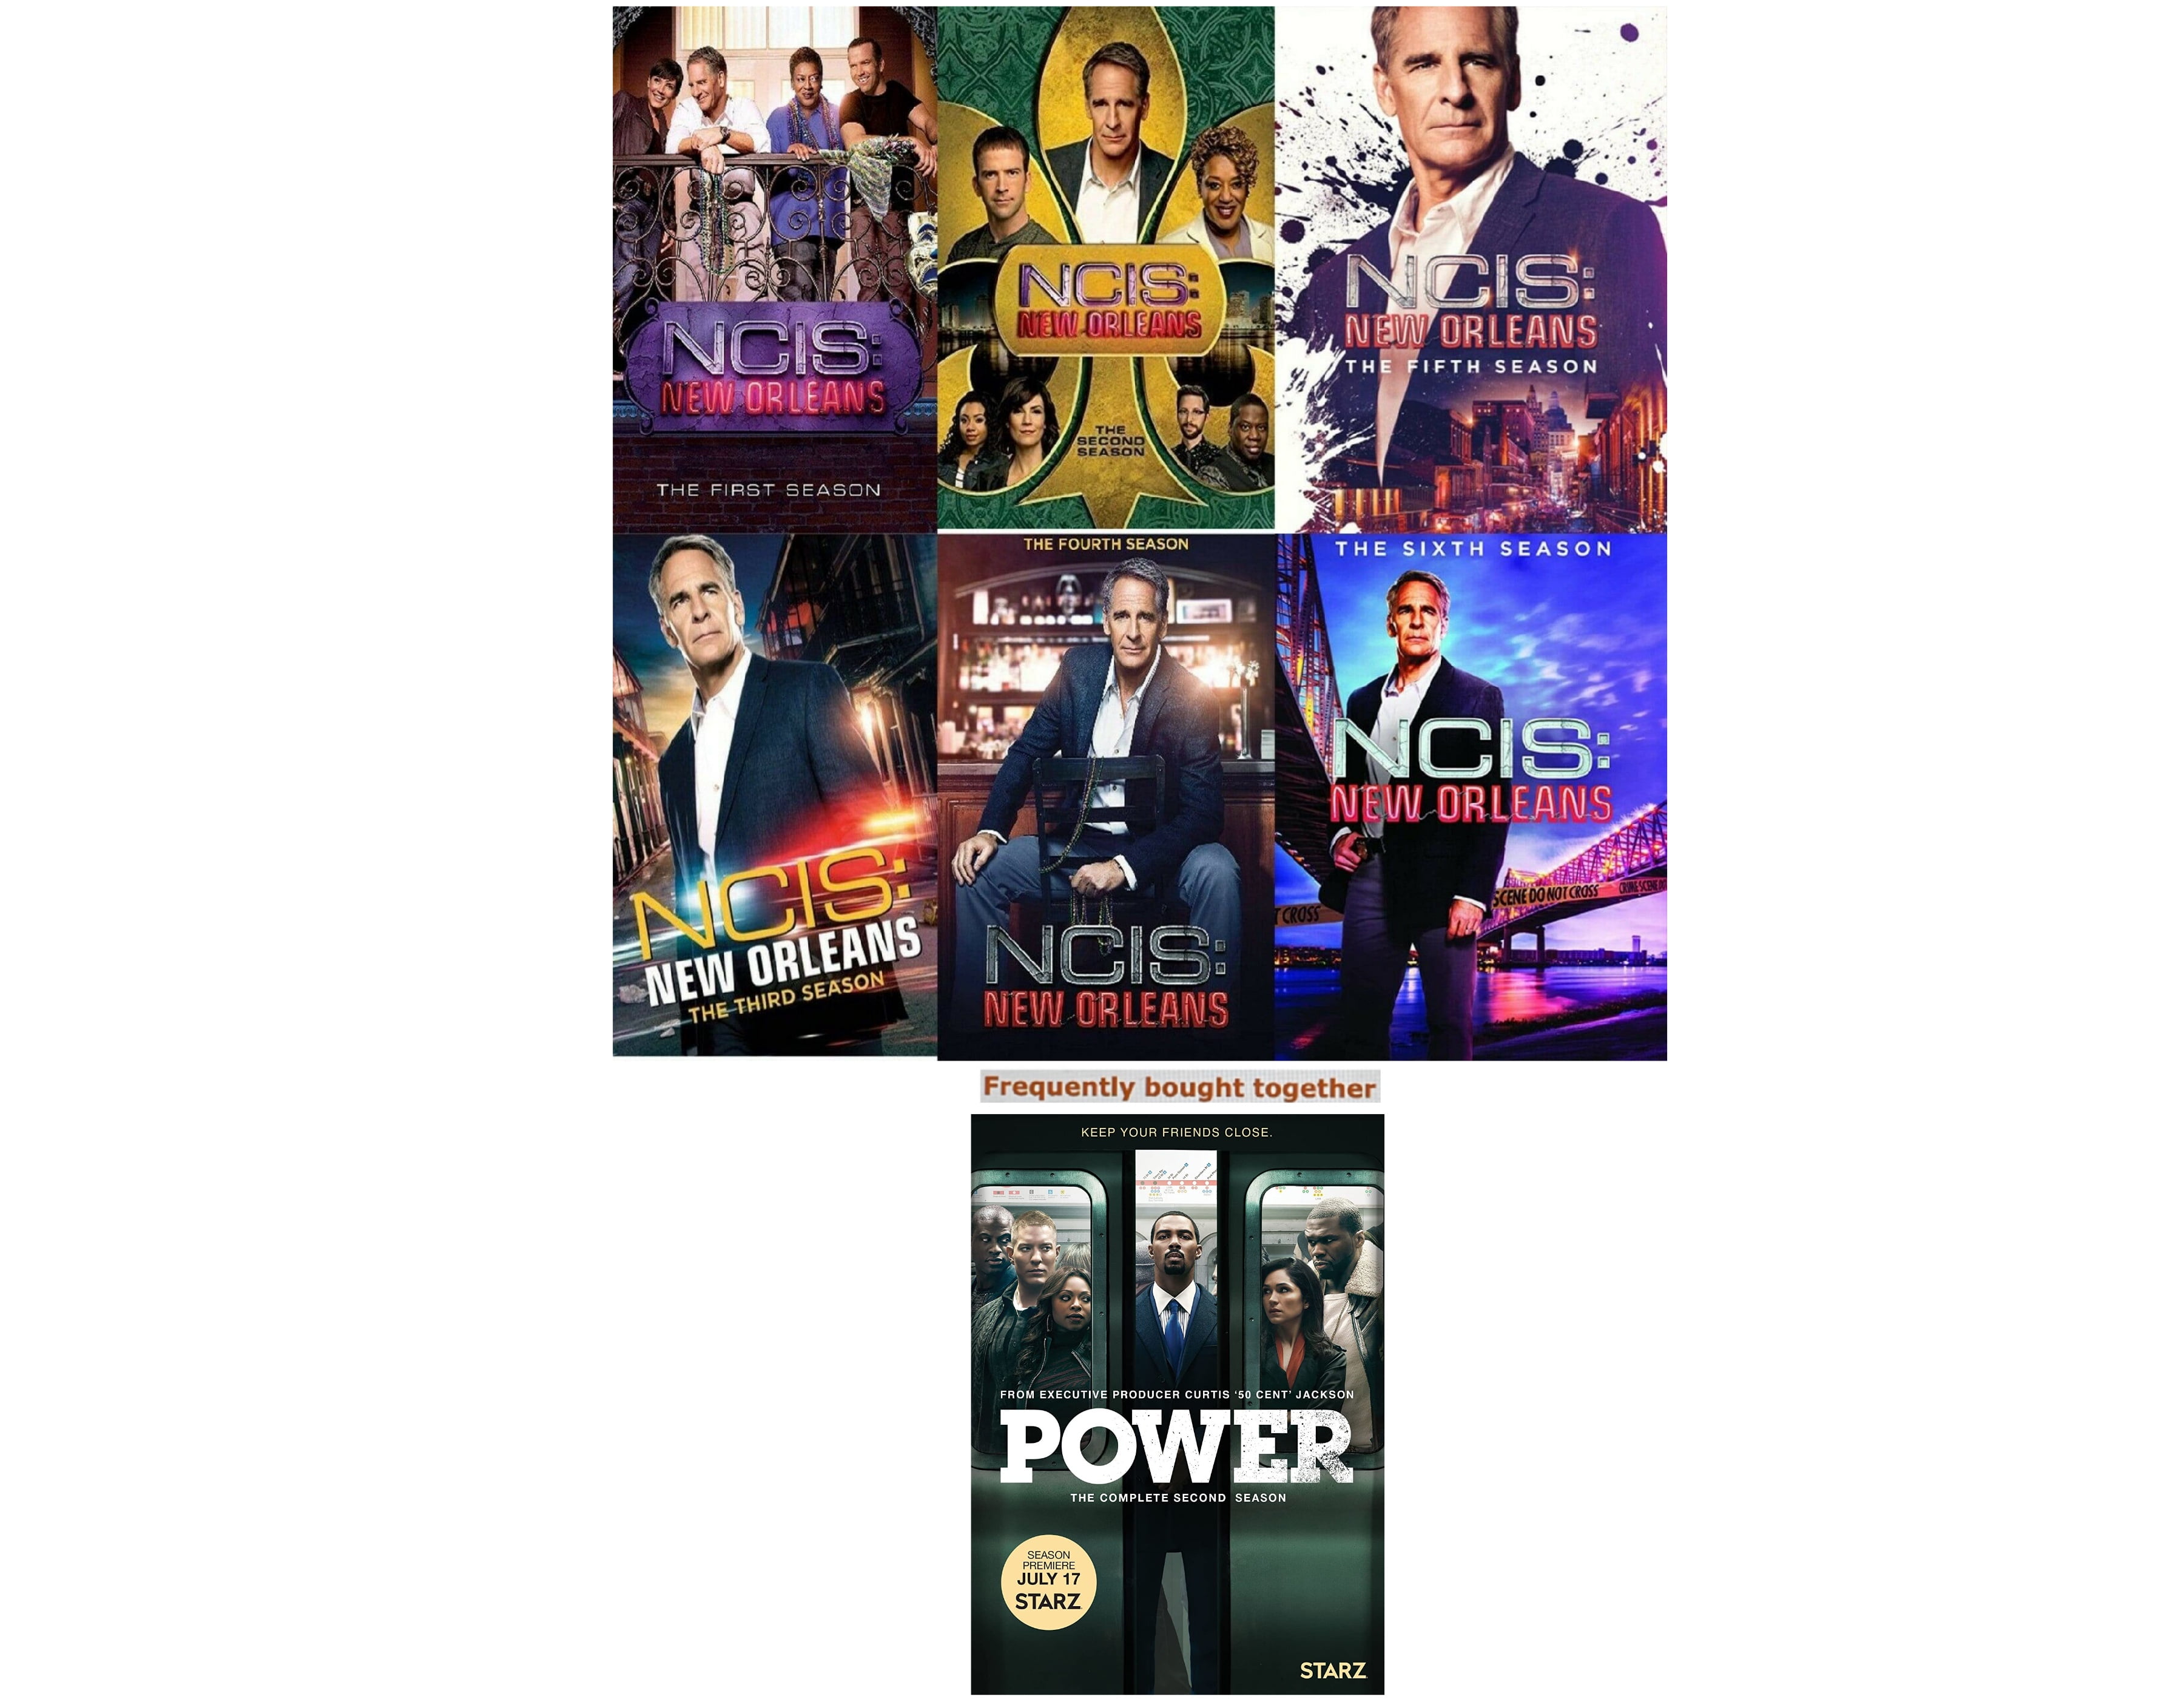 NCIS New Orleans The Complete Series Seasons 1-6 Seasons DVD + Guaranteed Free Bonus: Power 5 DVD